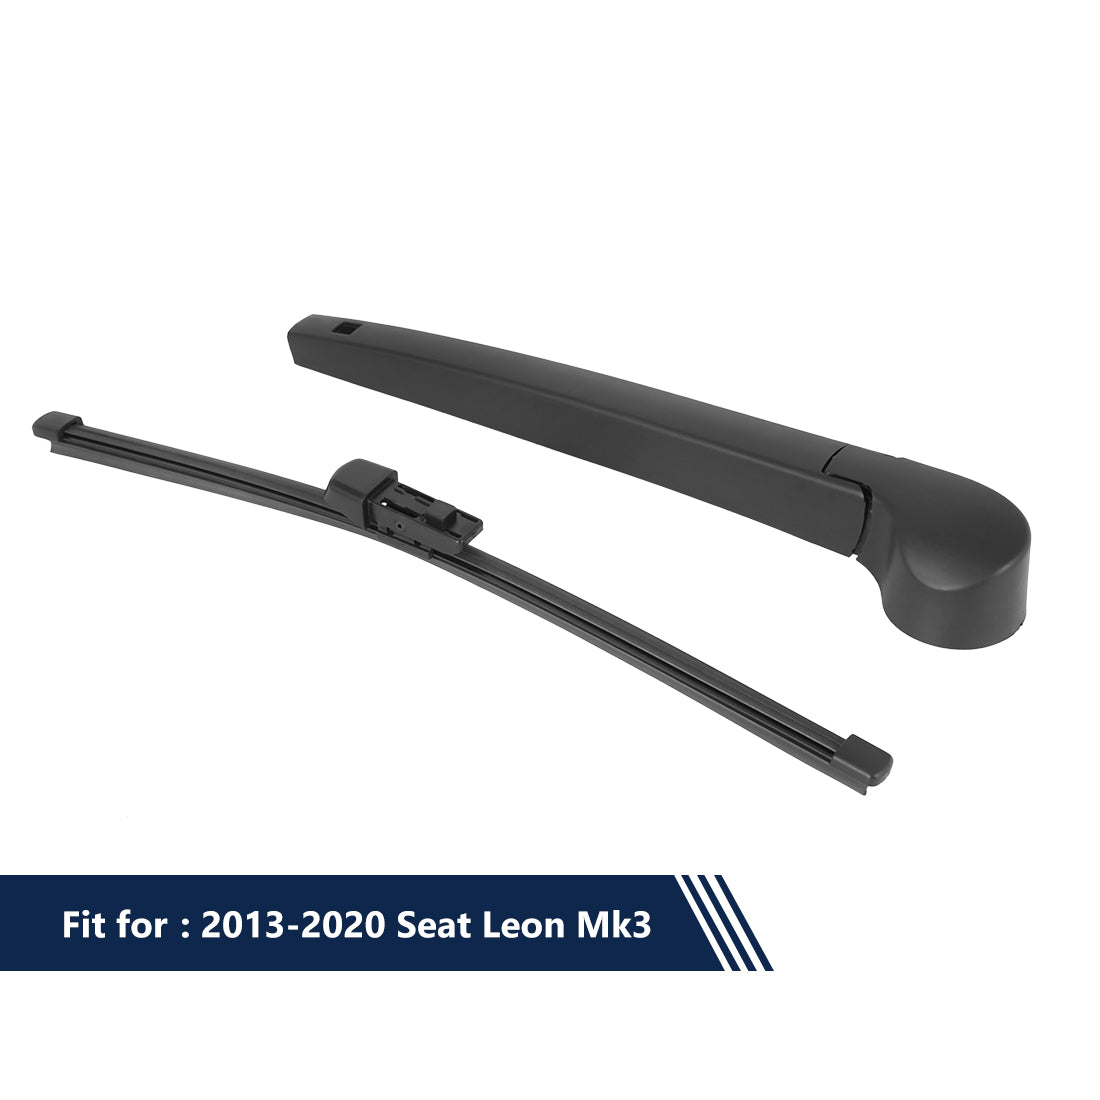 X AUTOHAUX Car 320mm 12'' Rear Windshield Wiper Blade Arm Set for Seat Leon Mk3 2013-2020